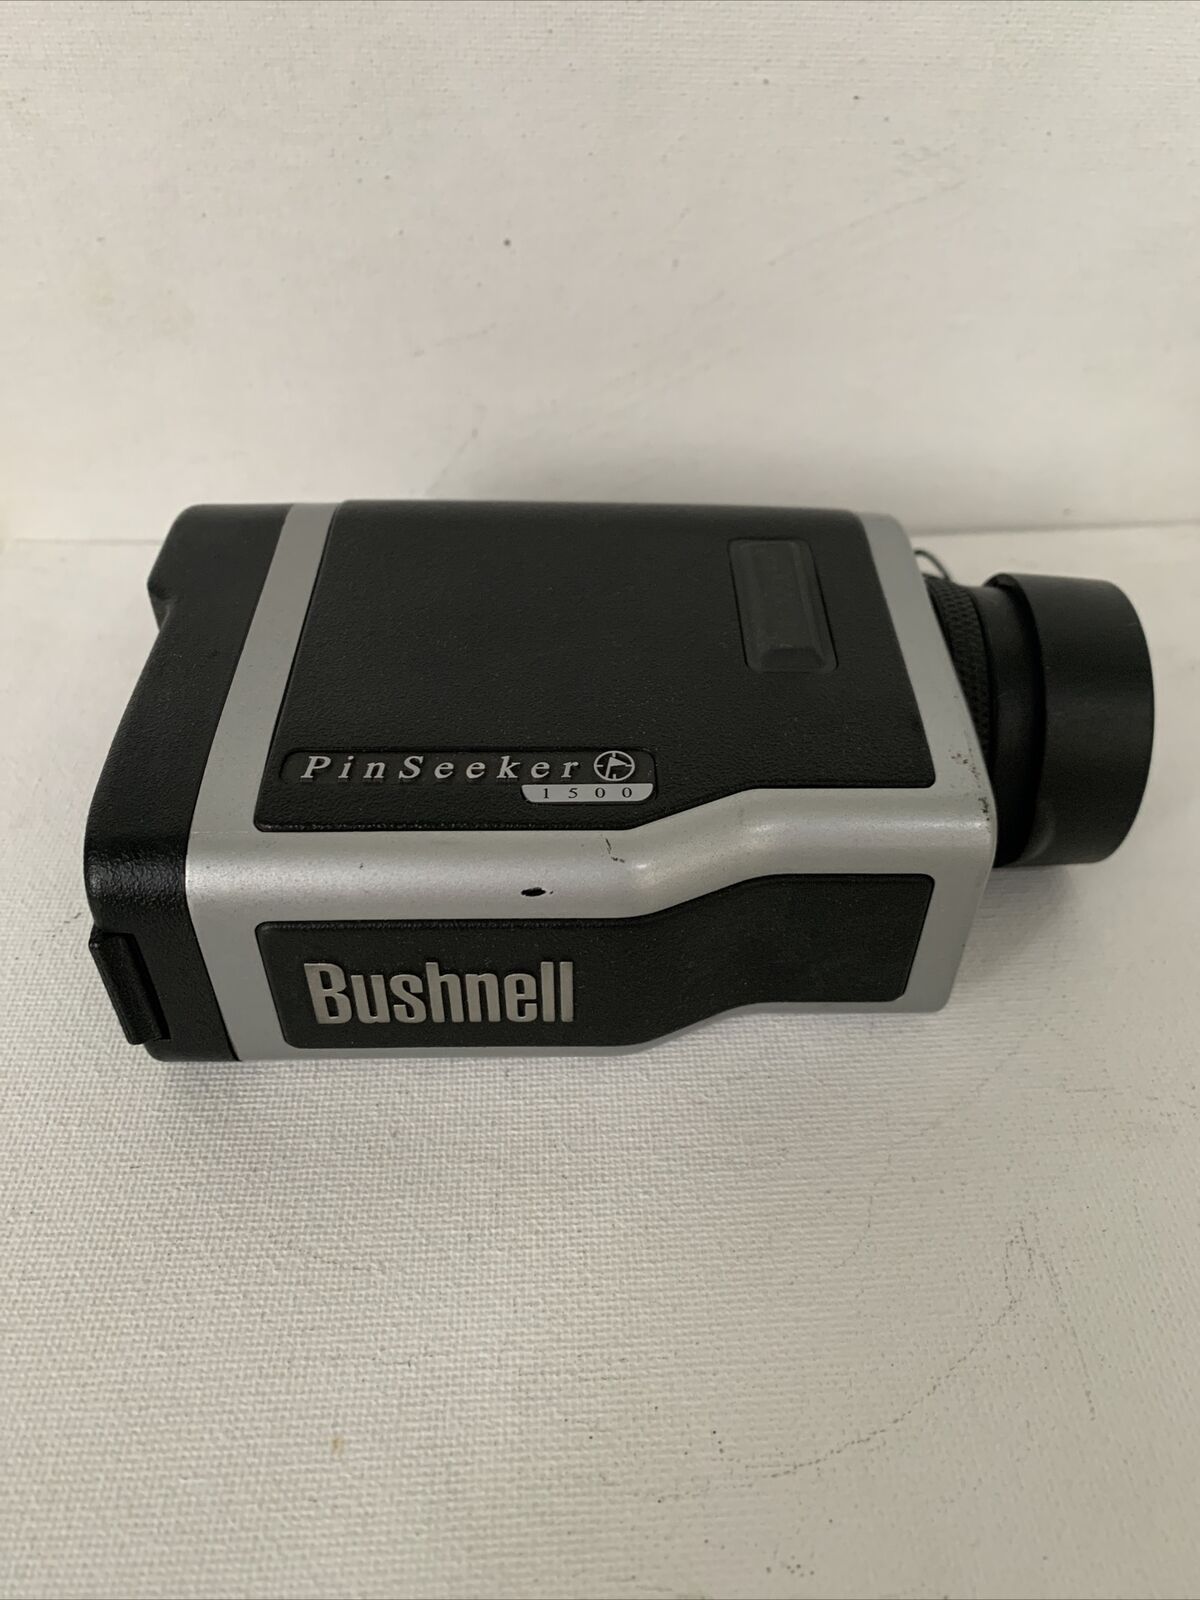 Bushnell PinSeeker 1500 Slope Edition Golf GPS Rangefinder Black